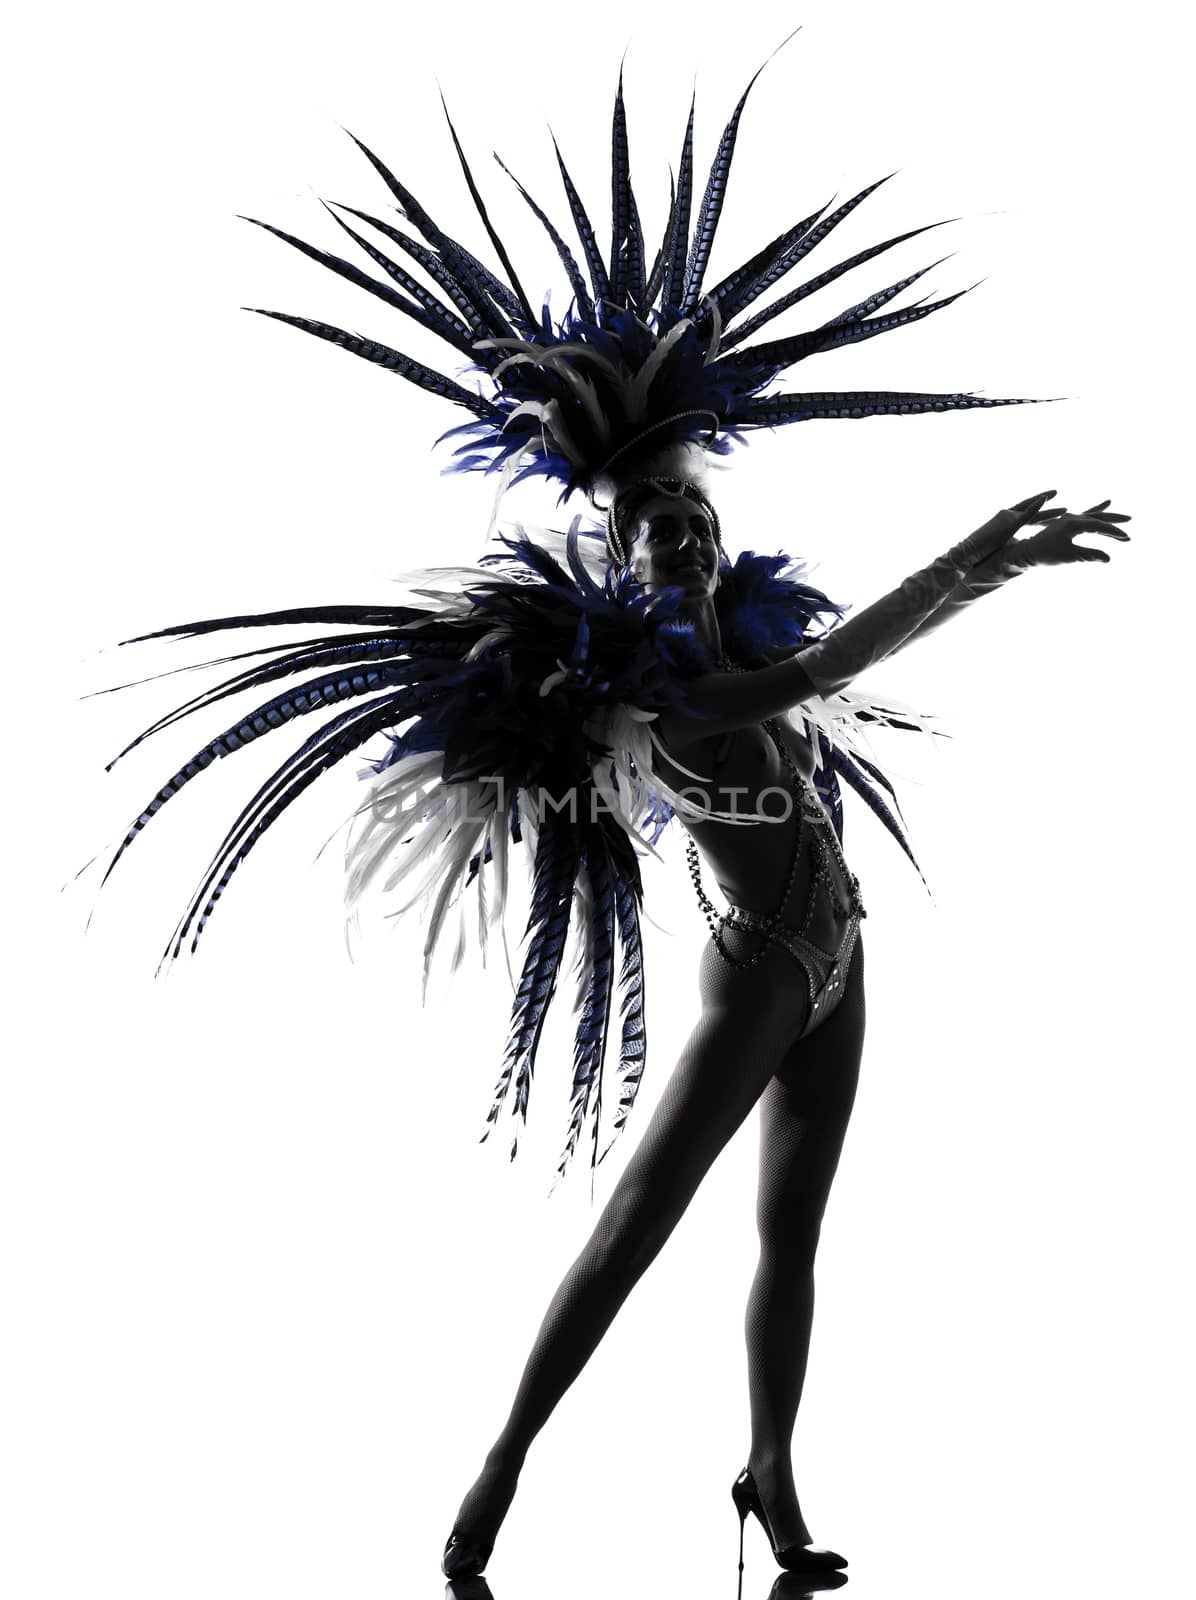 showgirl woman revue dancer dancing silhouette by PIXSTILL